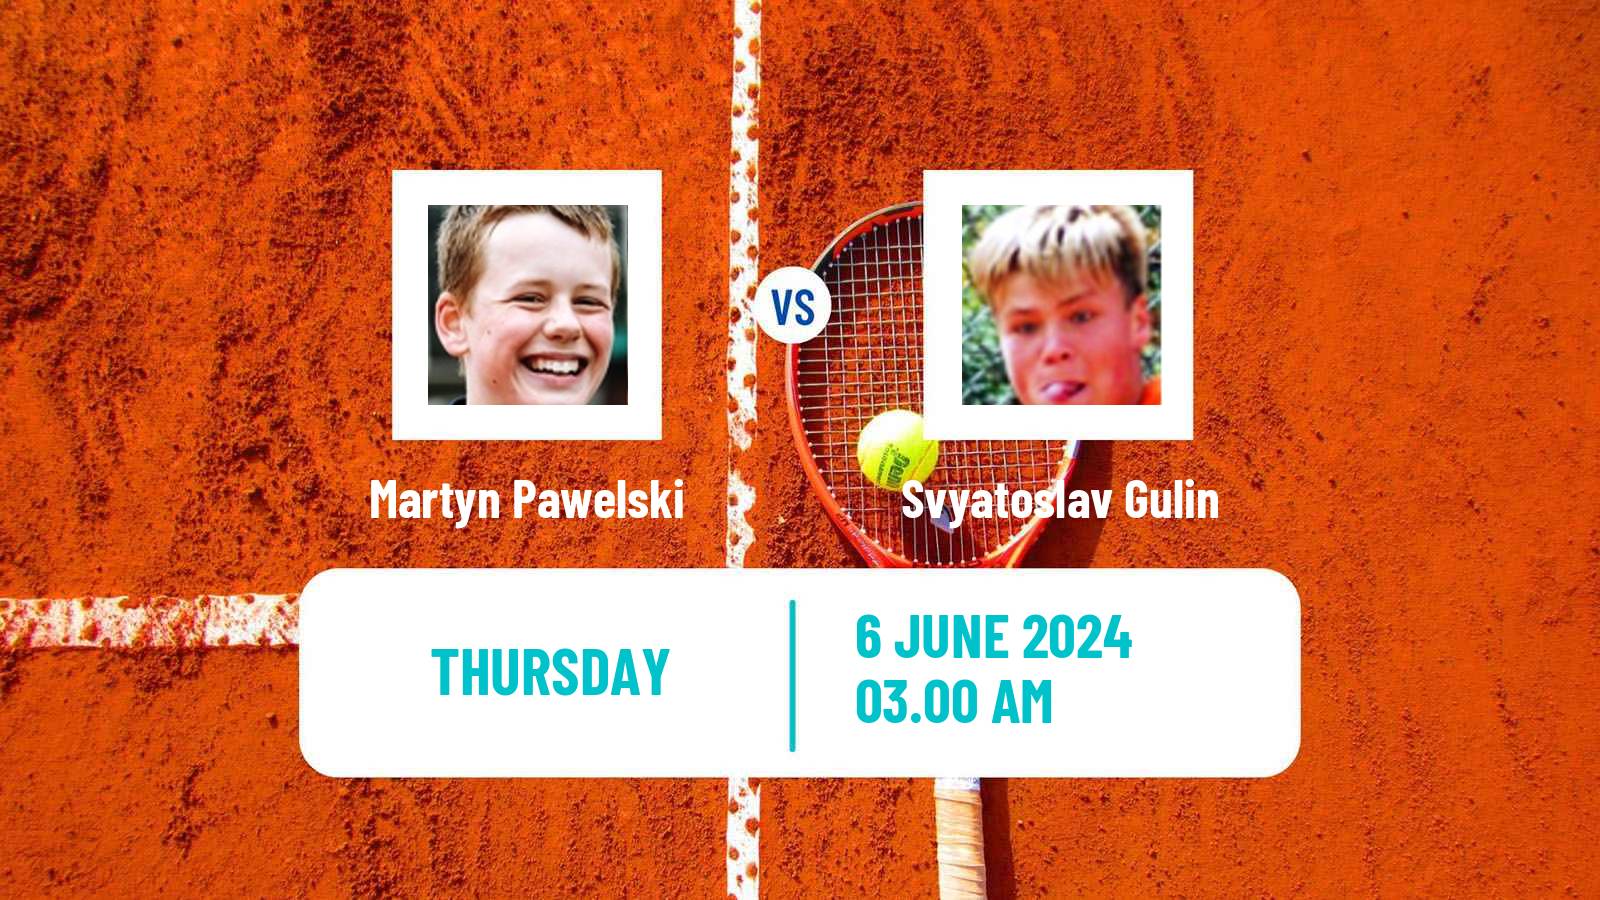 Tennis ITF M25 Kursumlijska Banja 2 Men Martyn Pawelski - Svyatoslav Gulin